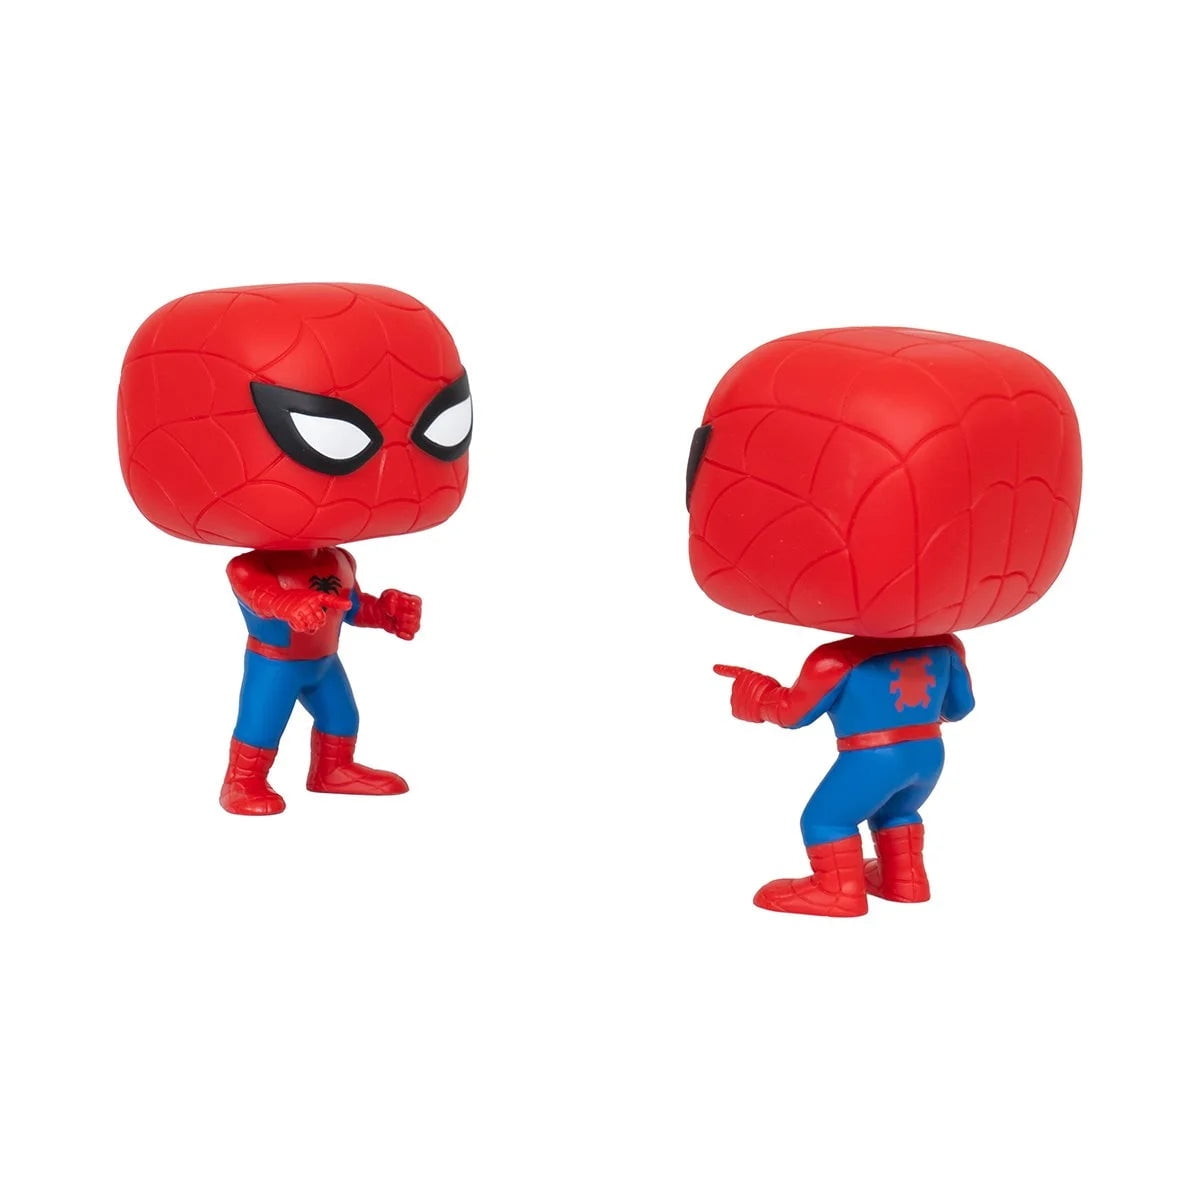 Marvel: Spider-Man Imposter 